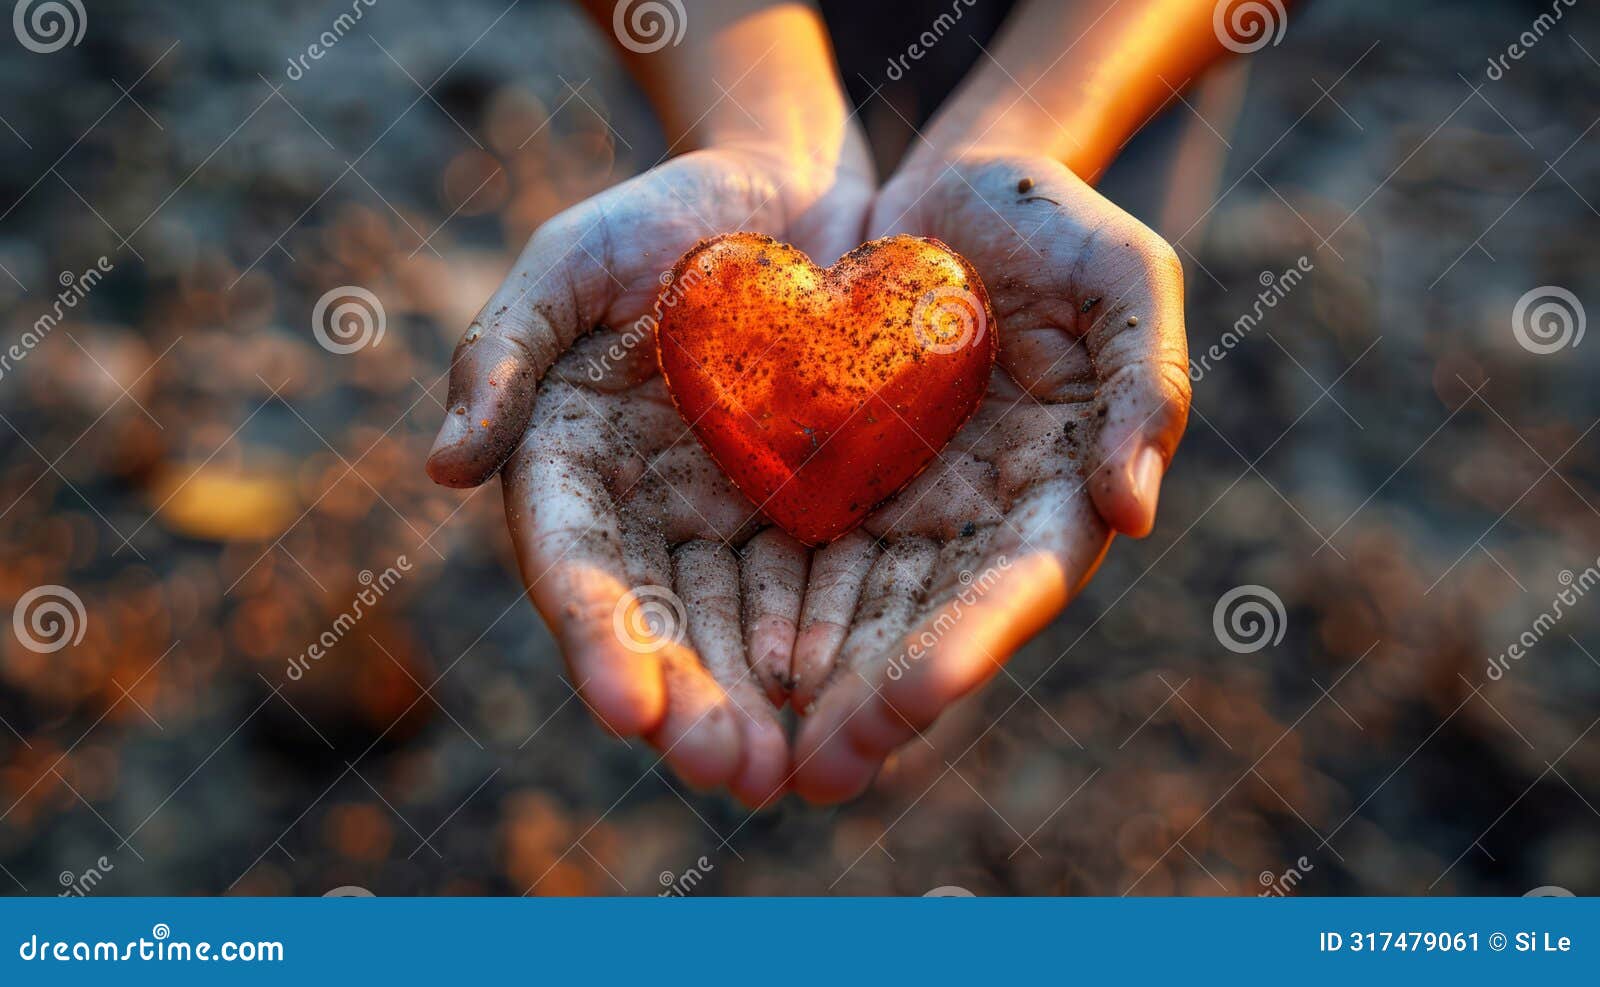 love in hand: a heartfelt donation gesture